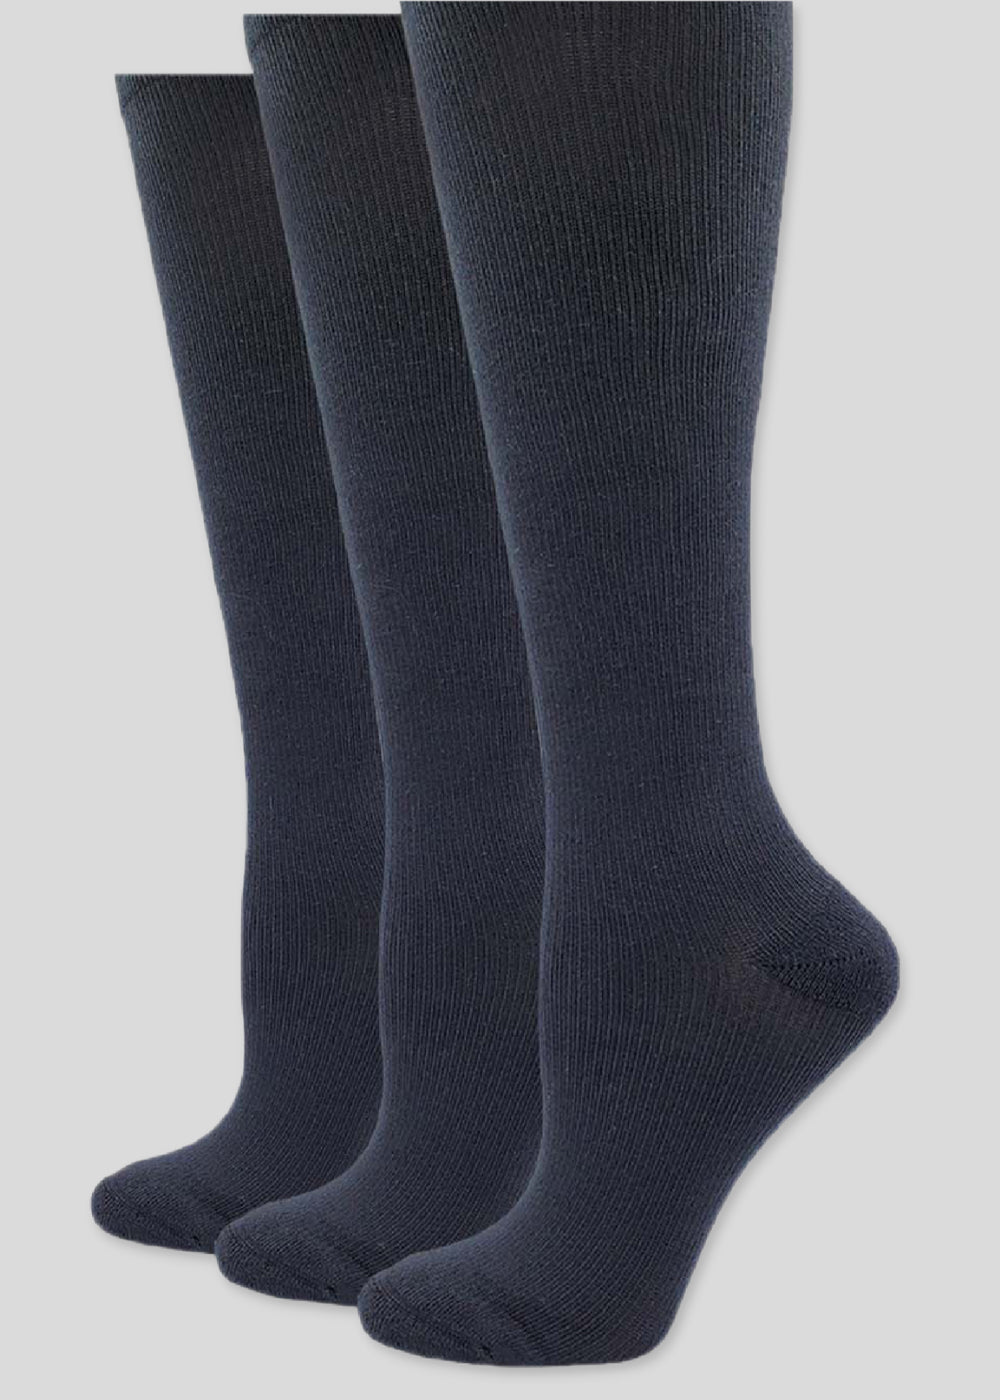 3-pack mild compression knee high socks in Black Yummie